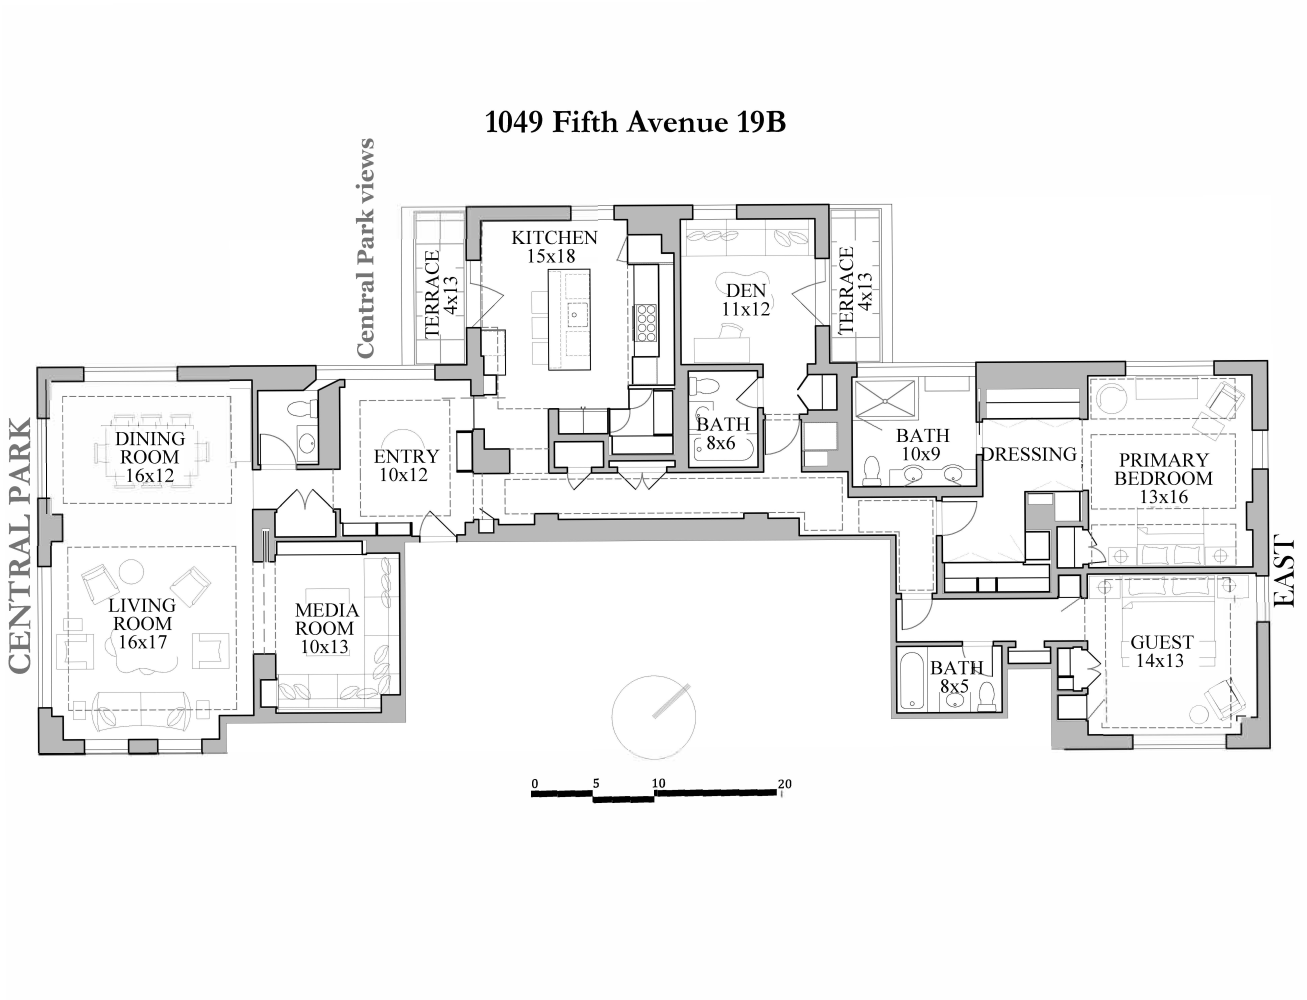 Floorplan for 1049 5th Avenue, 19B